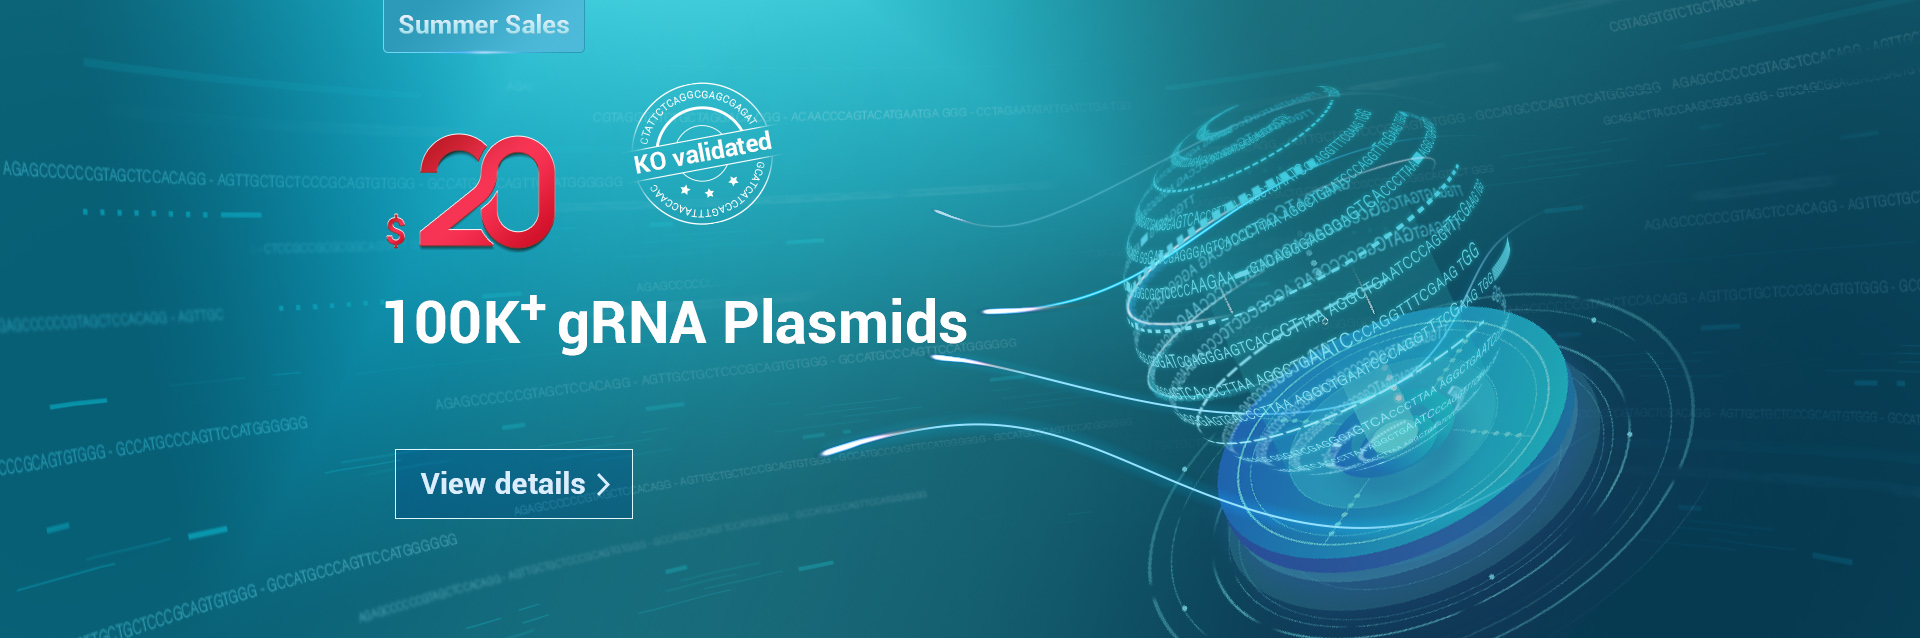 gRNA_plasmid_bank